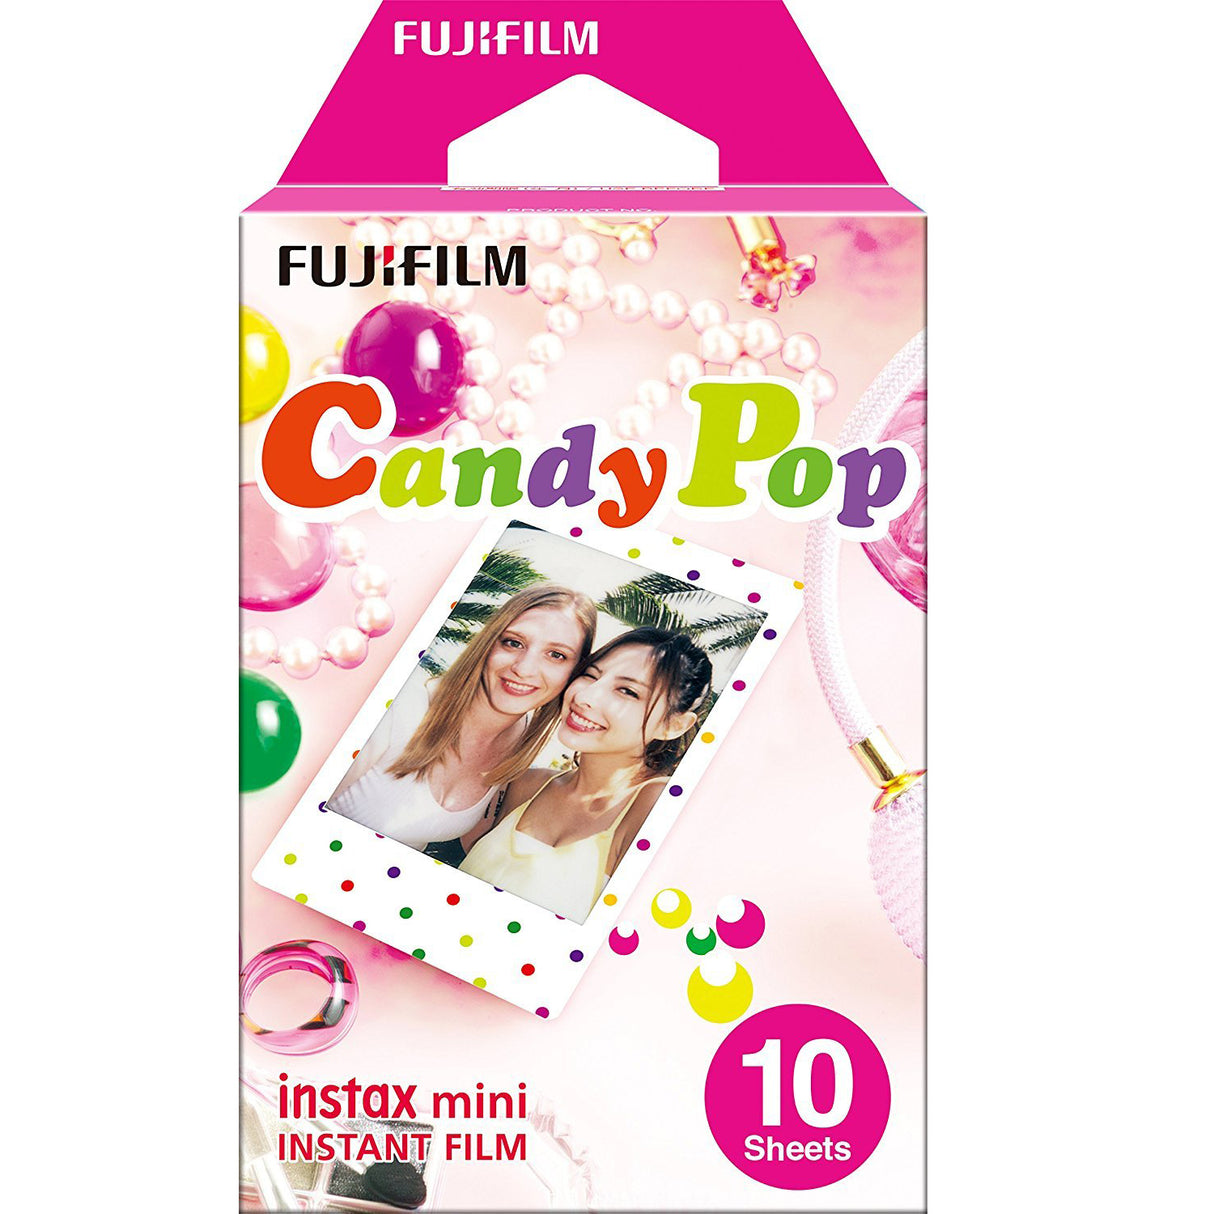 FUJIFILM Instax Mini 10x1 Instant Film Candy pop